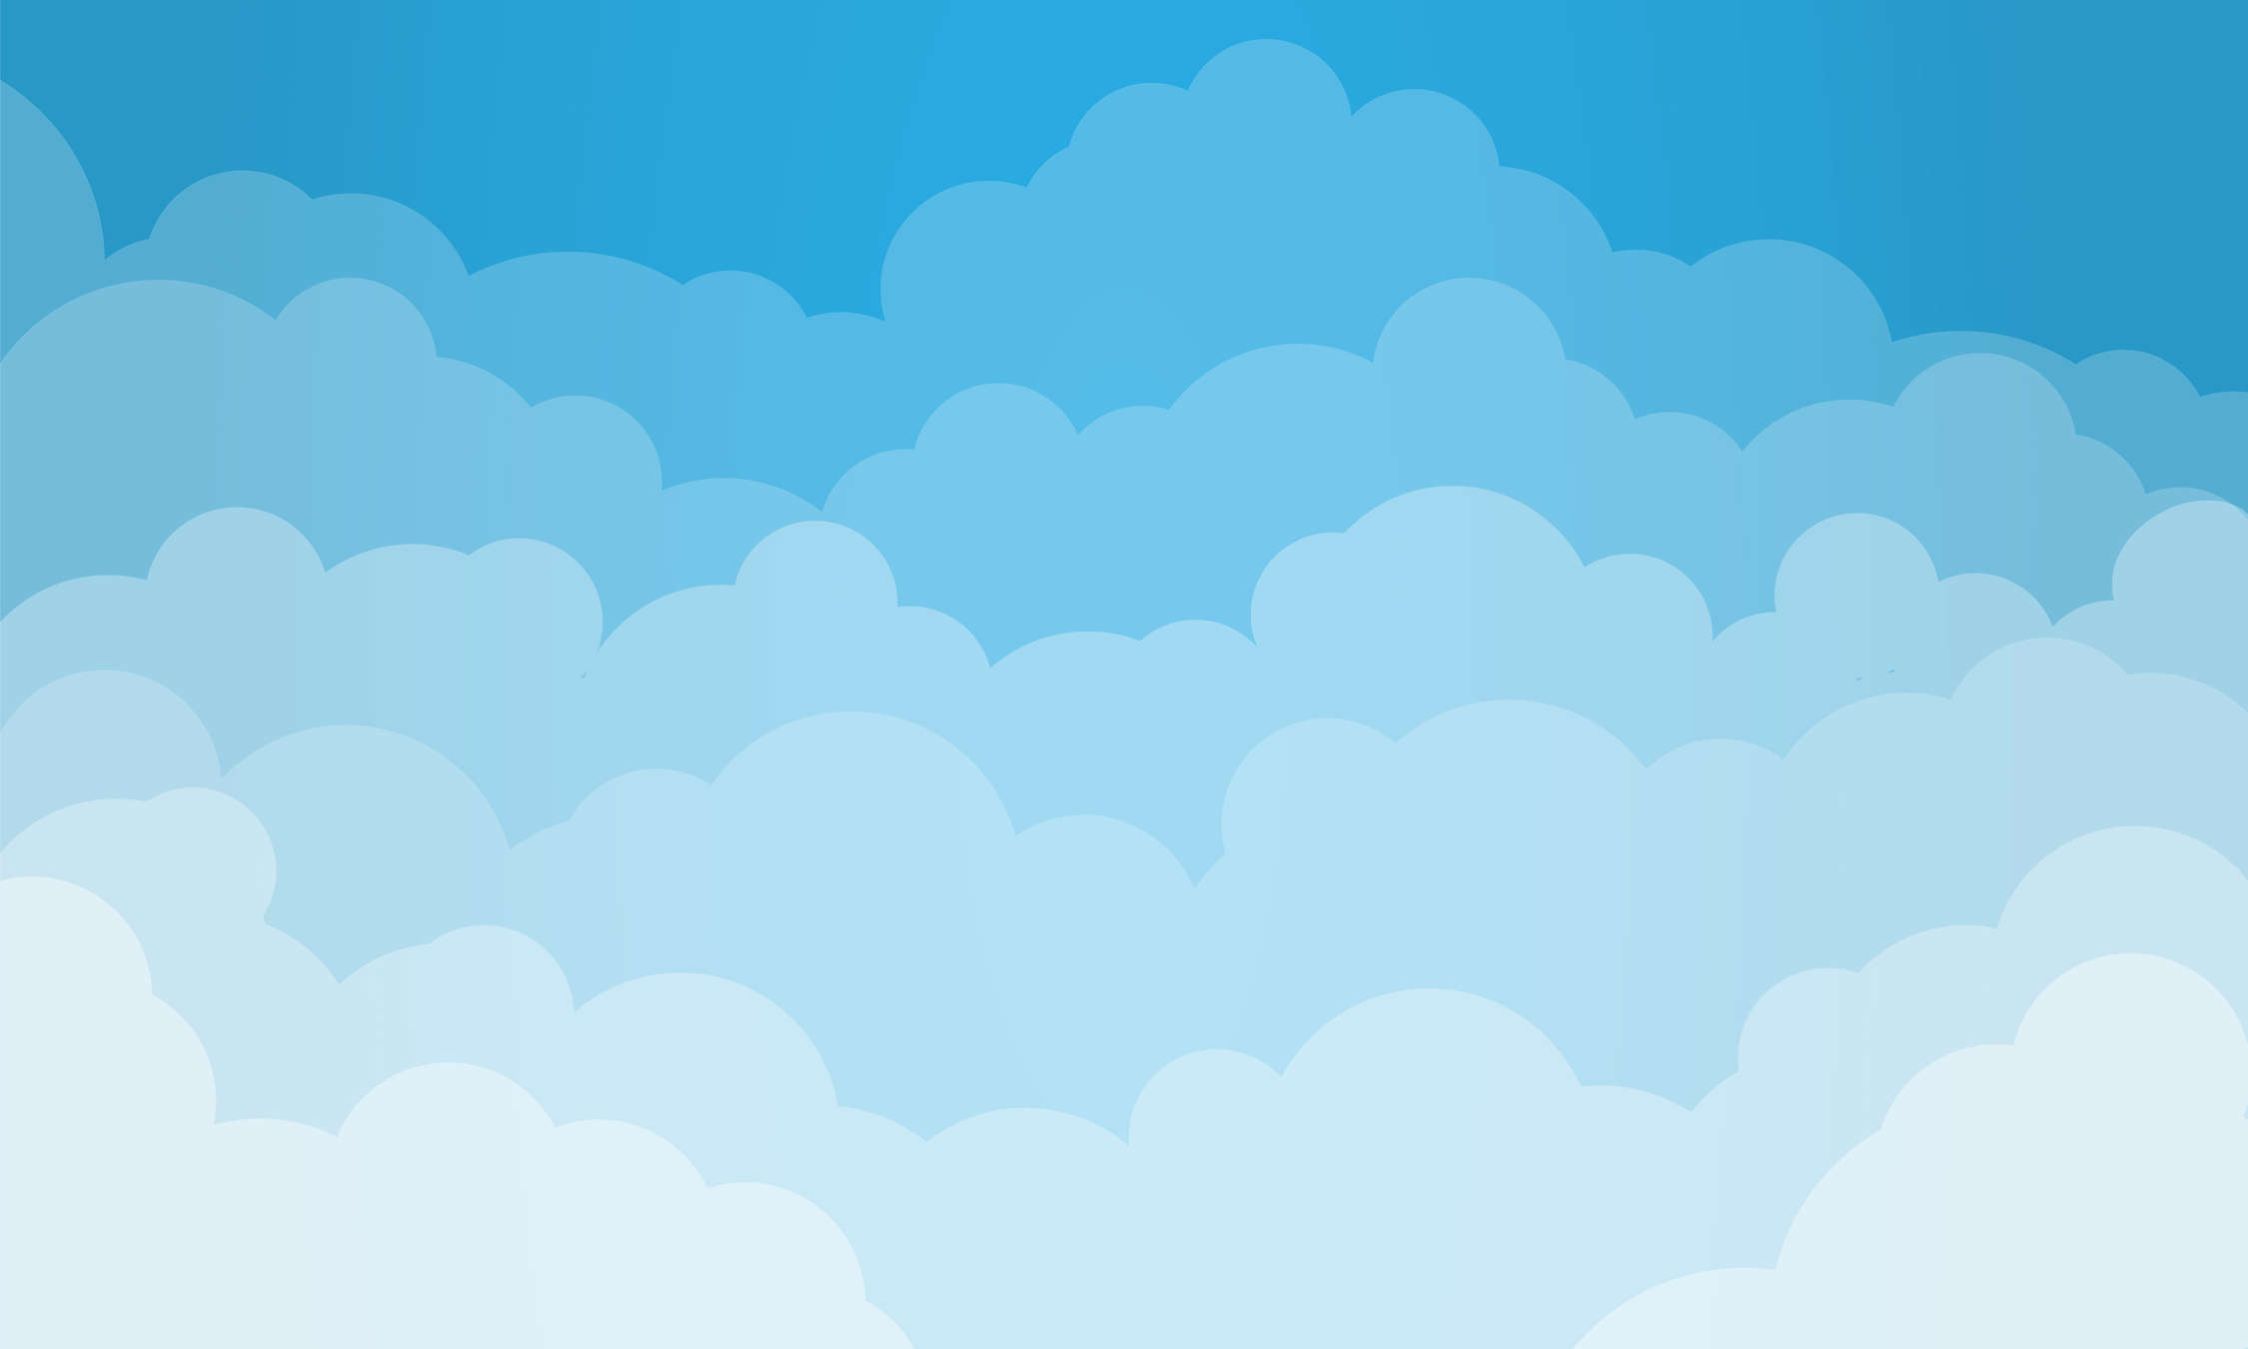             Lucht met wolken in stripstijl - Glad & parelmoerachtig vliesbehang
        